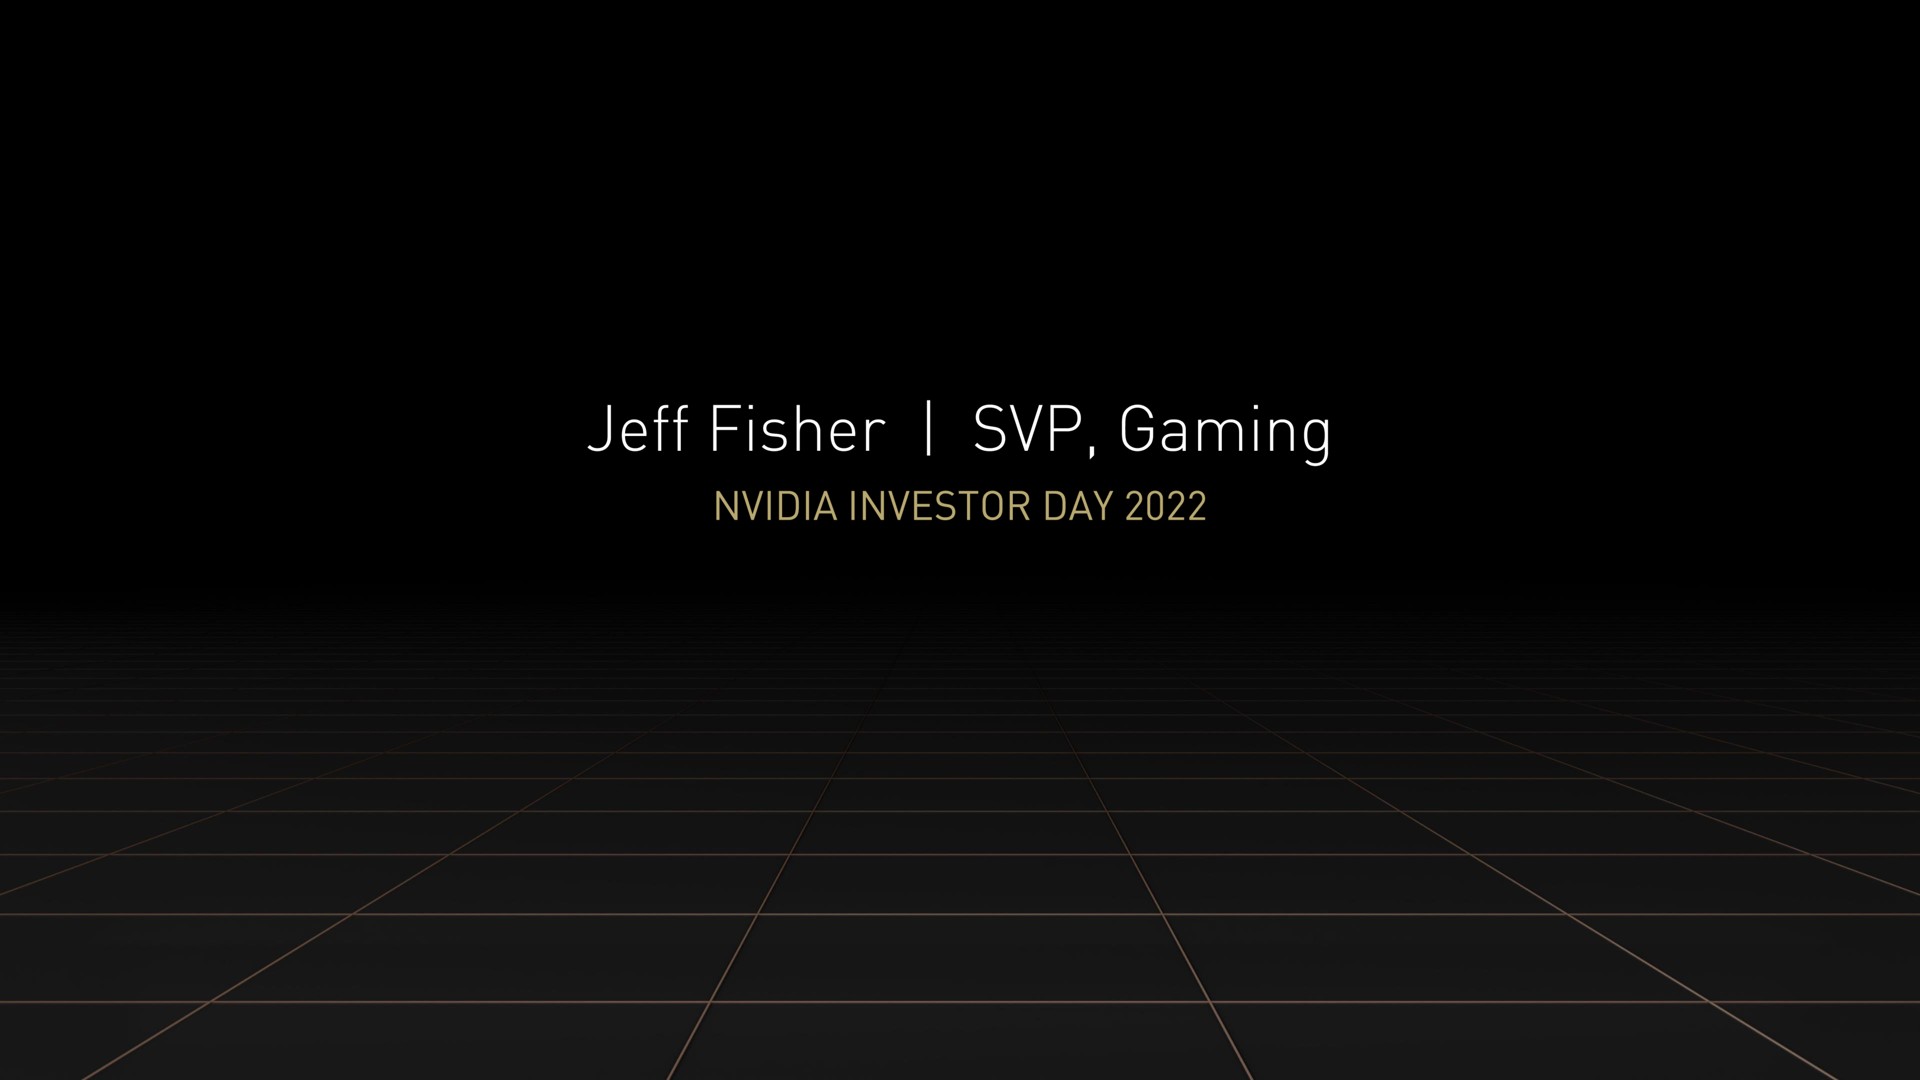 jeff fisher gaming investor day | NVIDIA